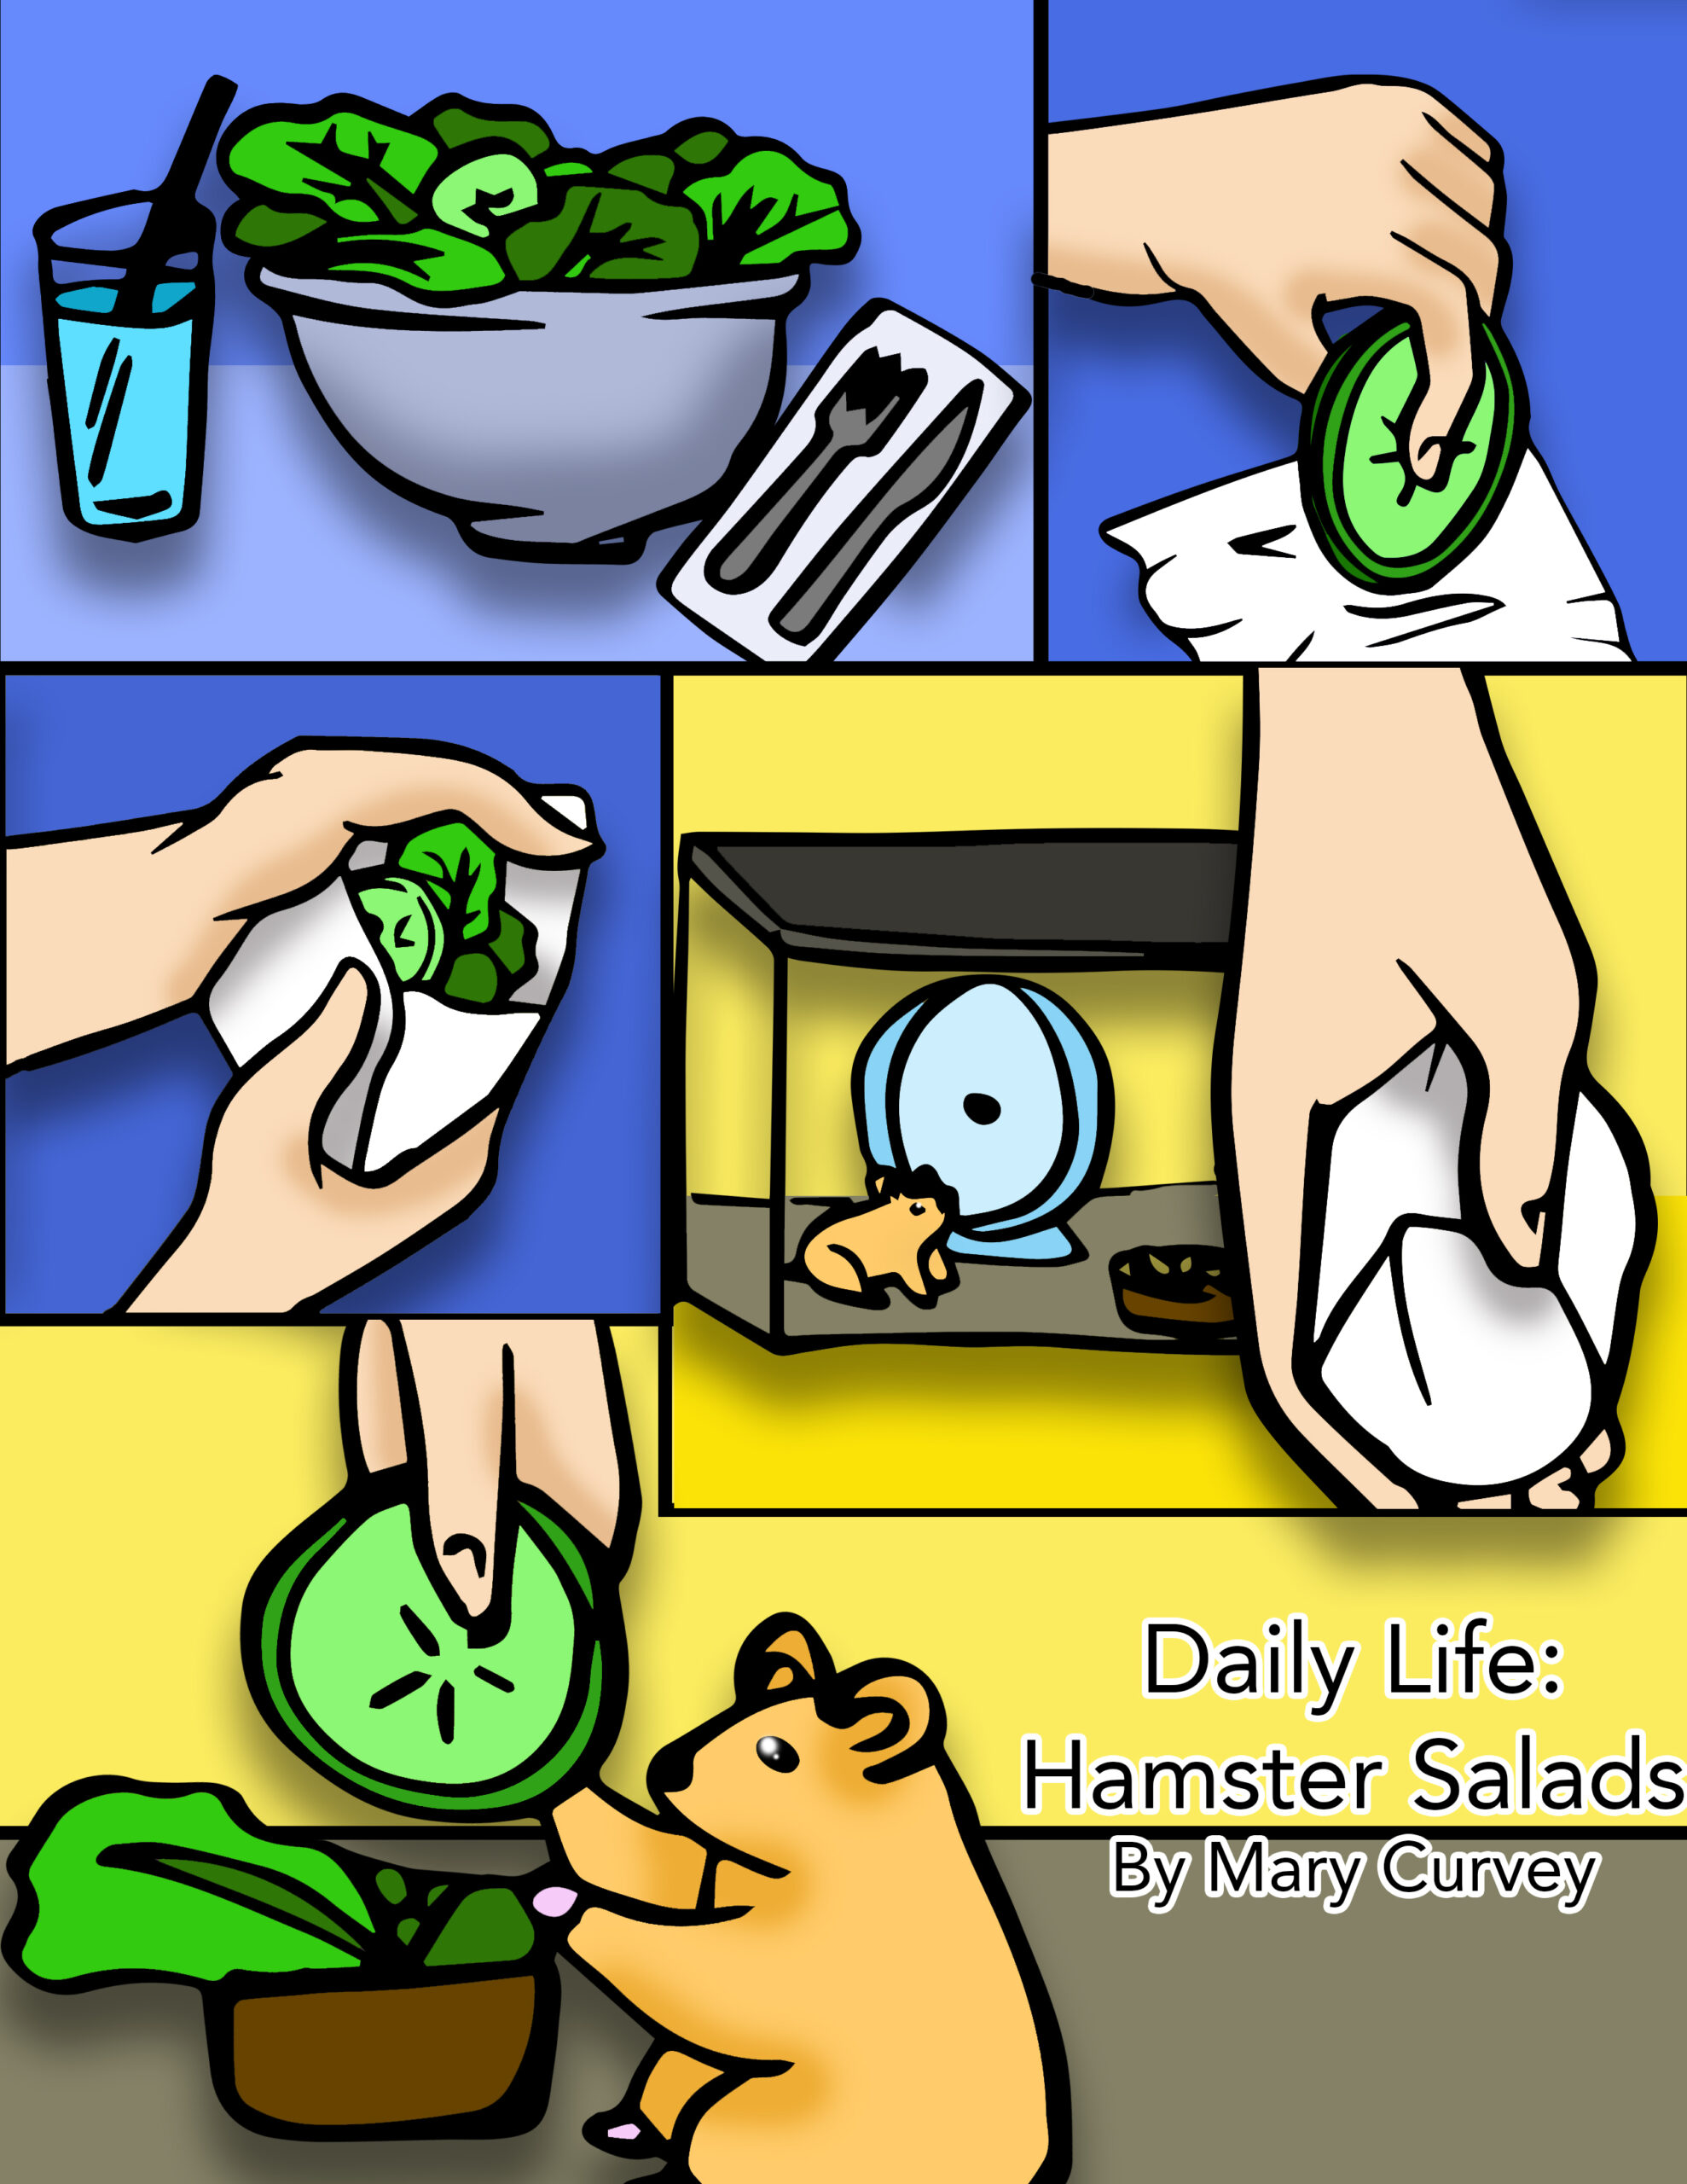 daily life- hamster salads mary curvey